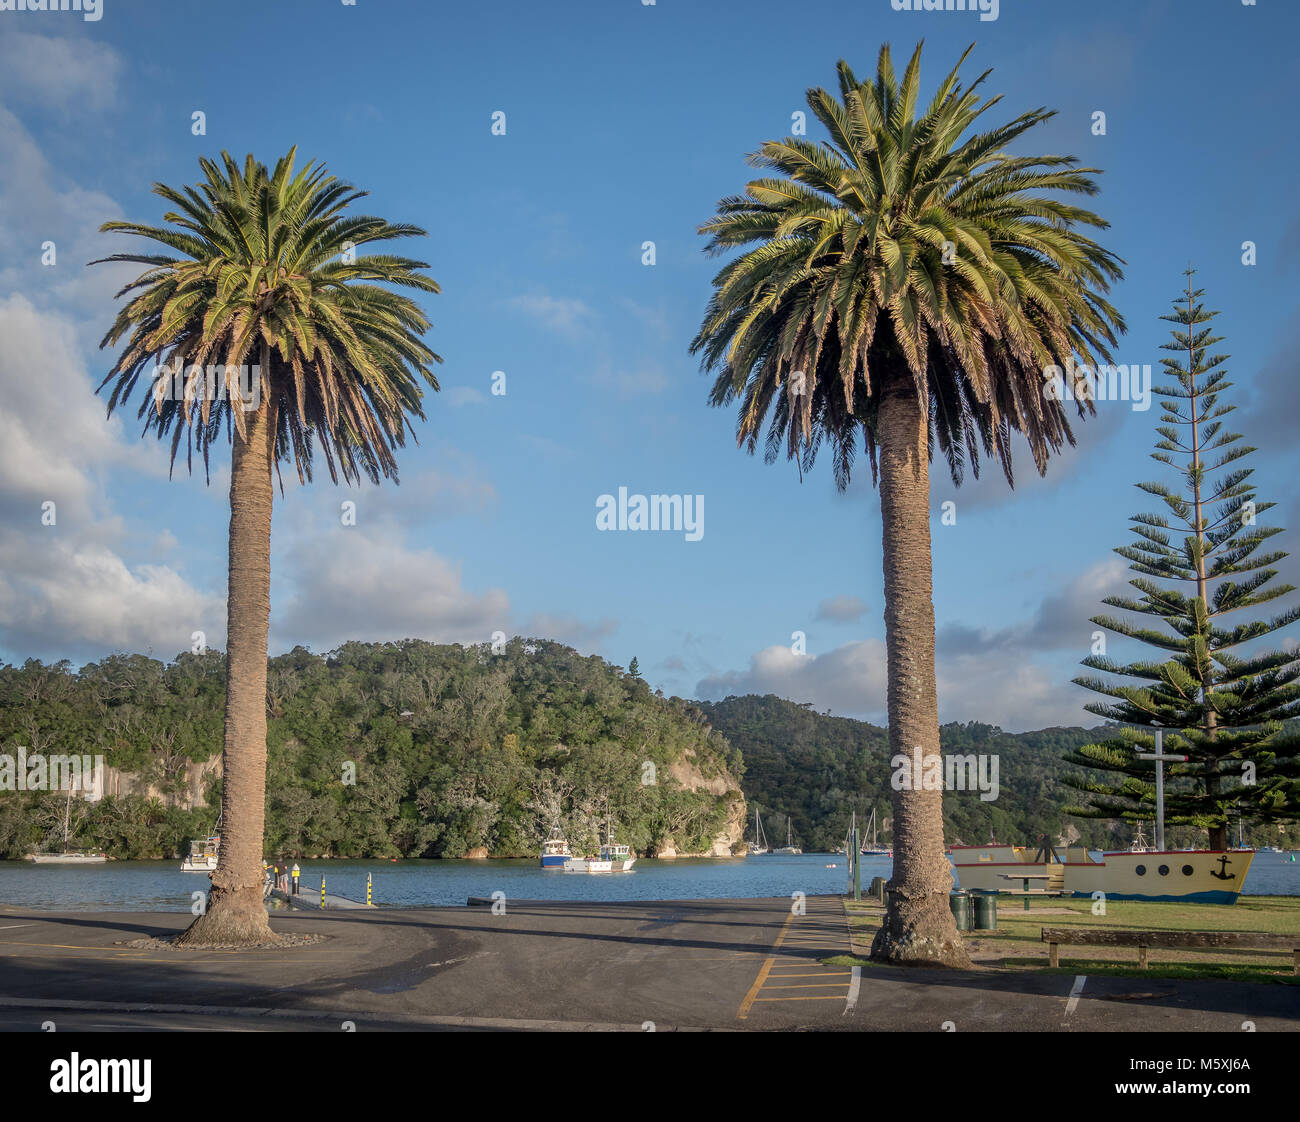 The beautiful palm trees in Whitianga, New Zealand Stock Photo